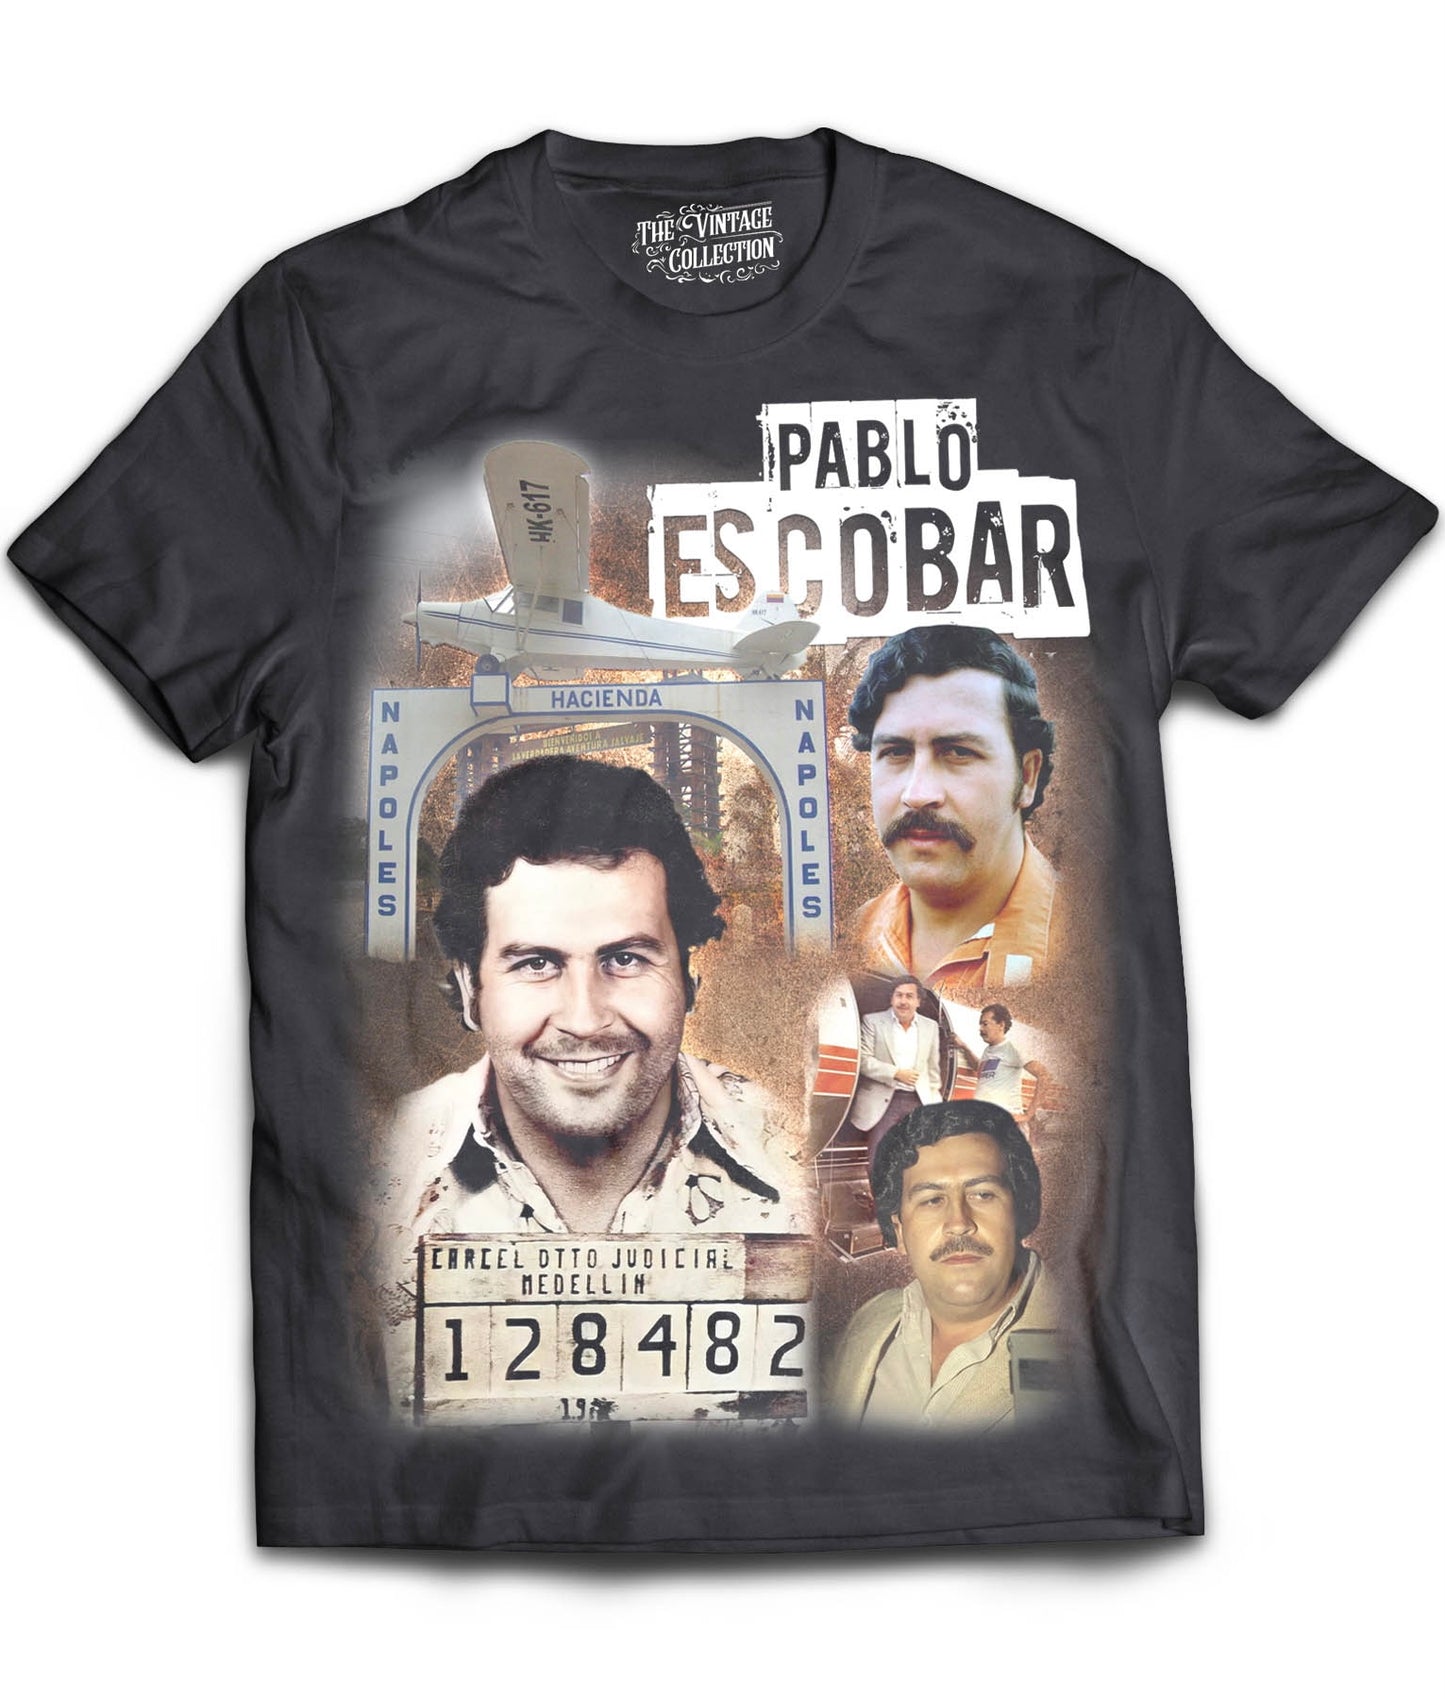 Pablo Escobar Tribute Shirt (Black)